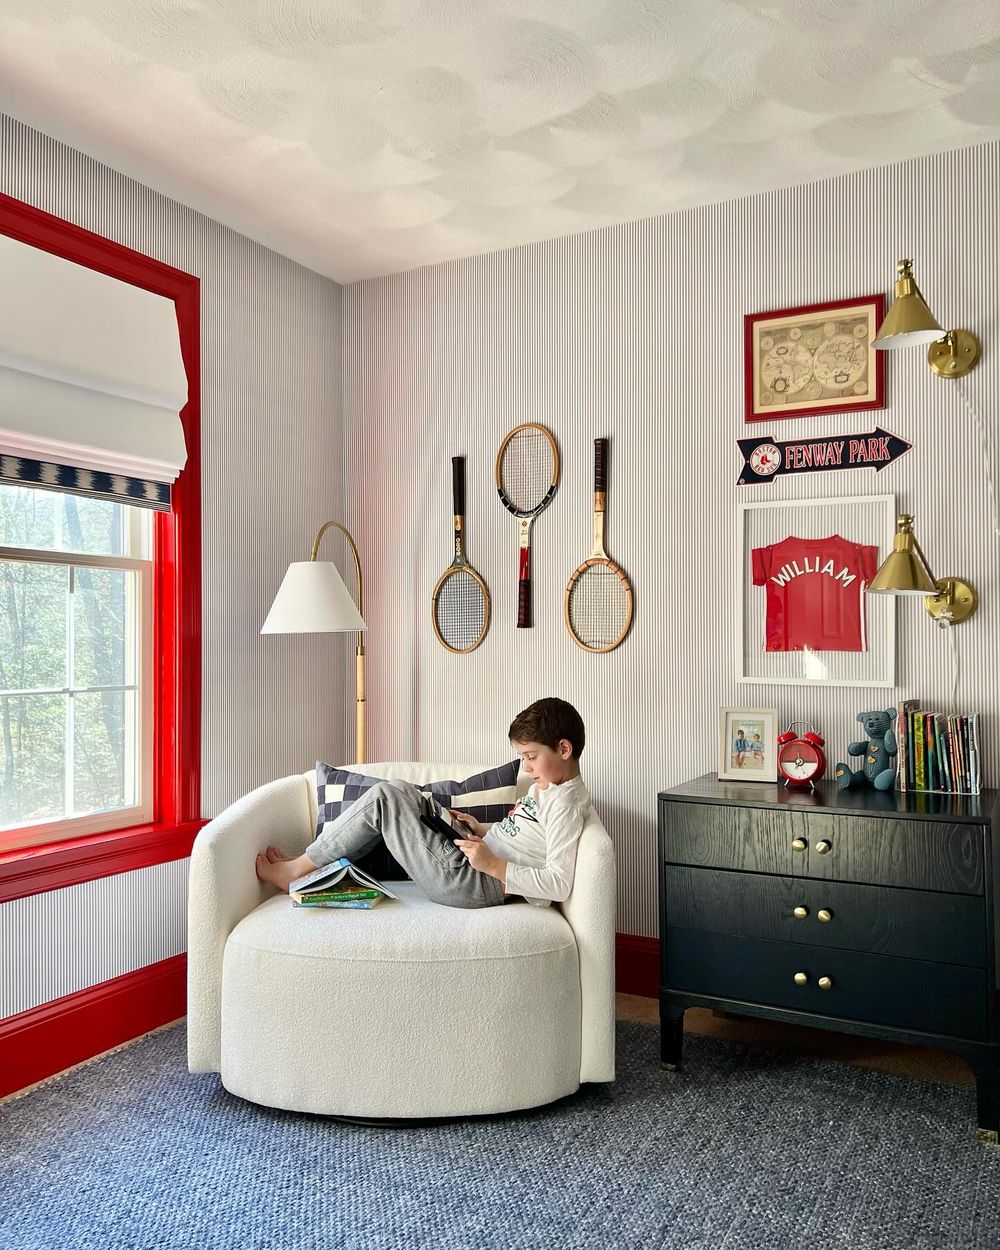 Boys bedroom decor All American Tennis Theme homeandhallow